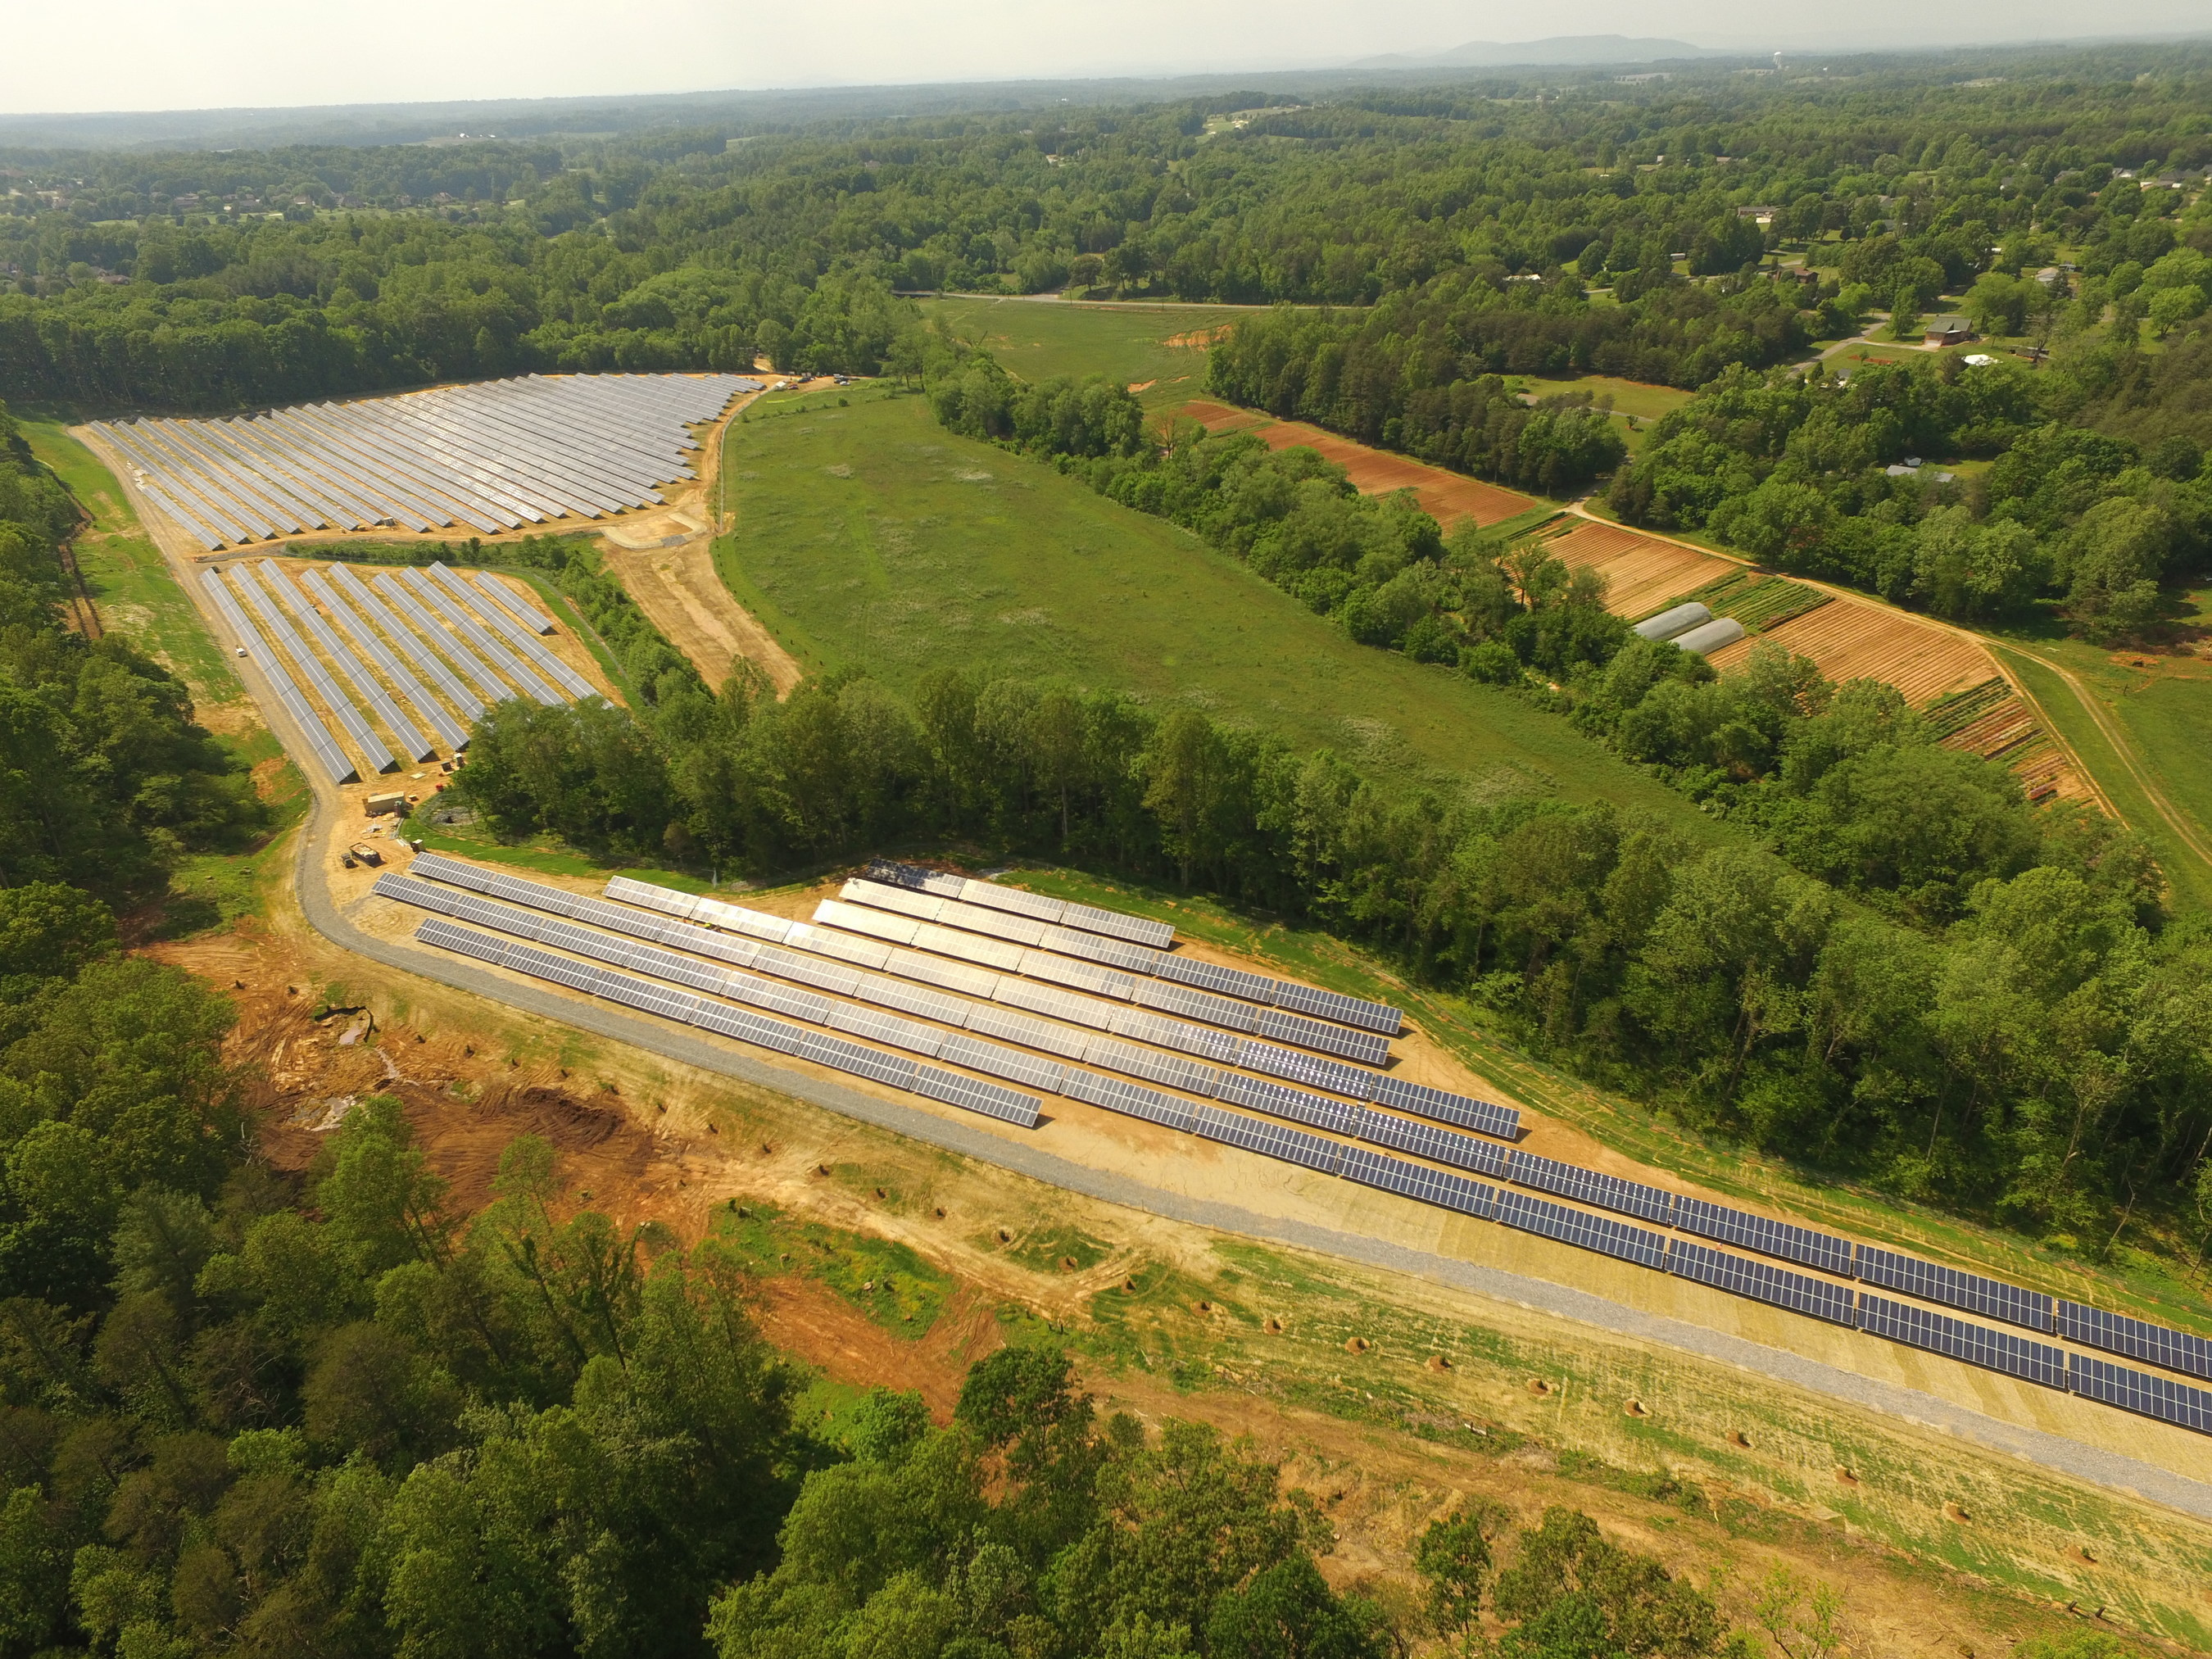 Aerial view of 5.25 megawatt solar array at country club in North Carolina